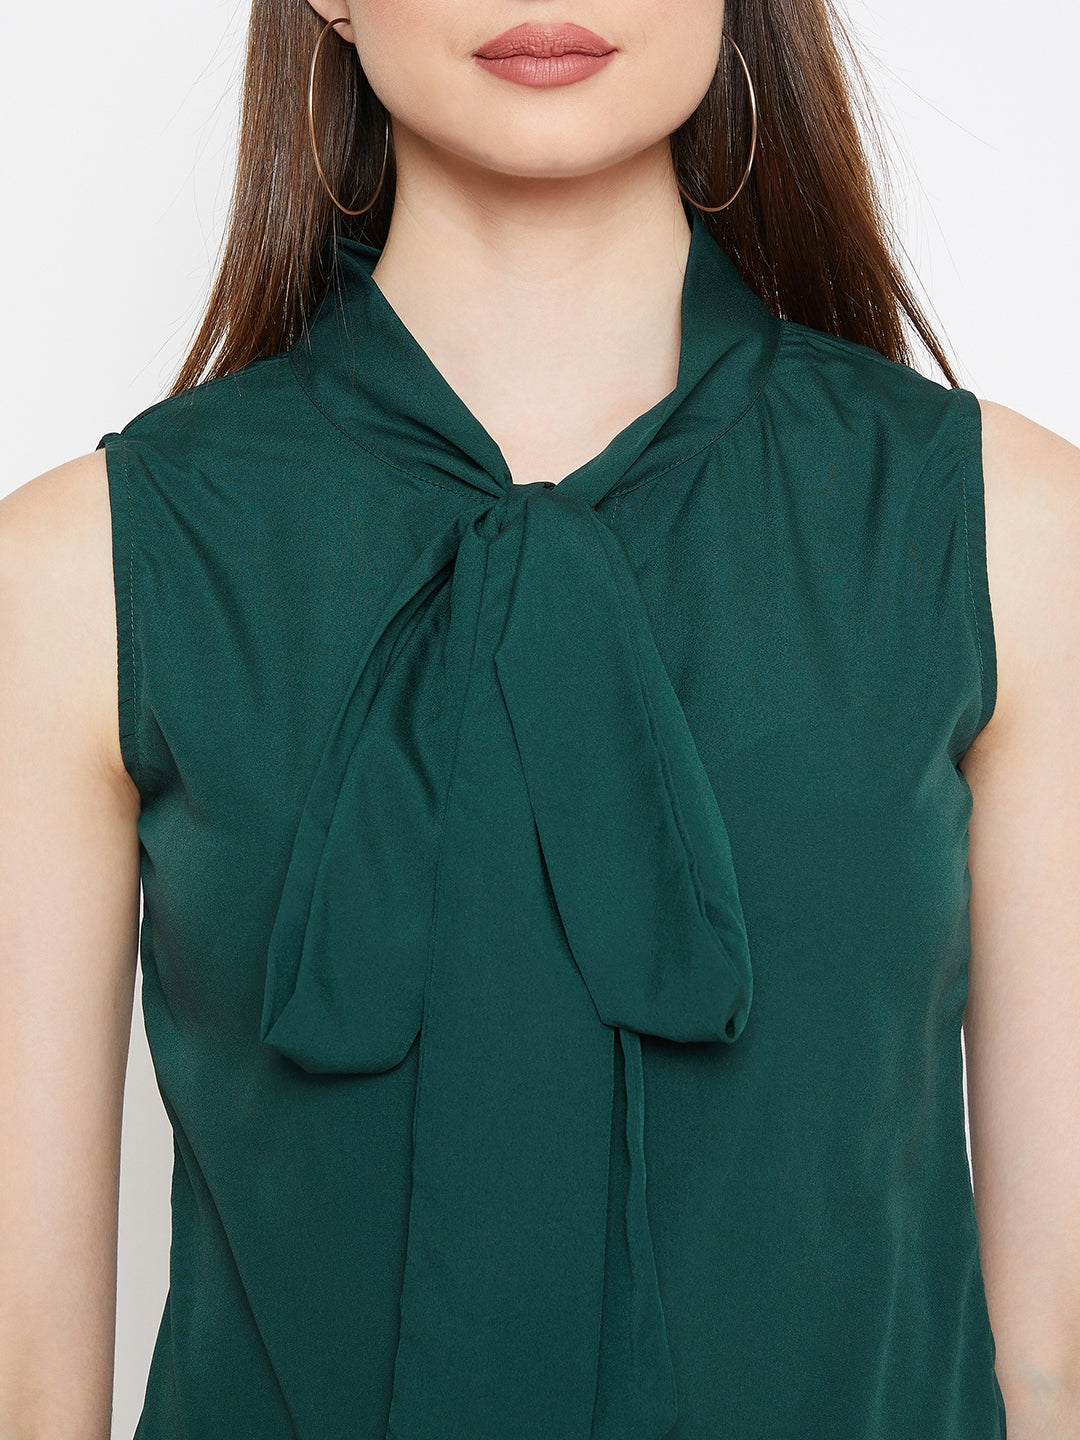 Berrylush Women Solid Green Sleeveless Front Tie-Knot Top